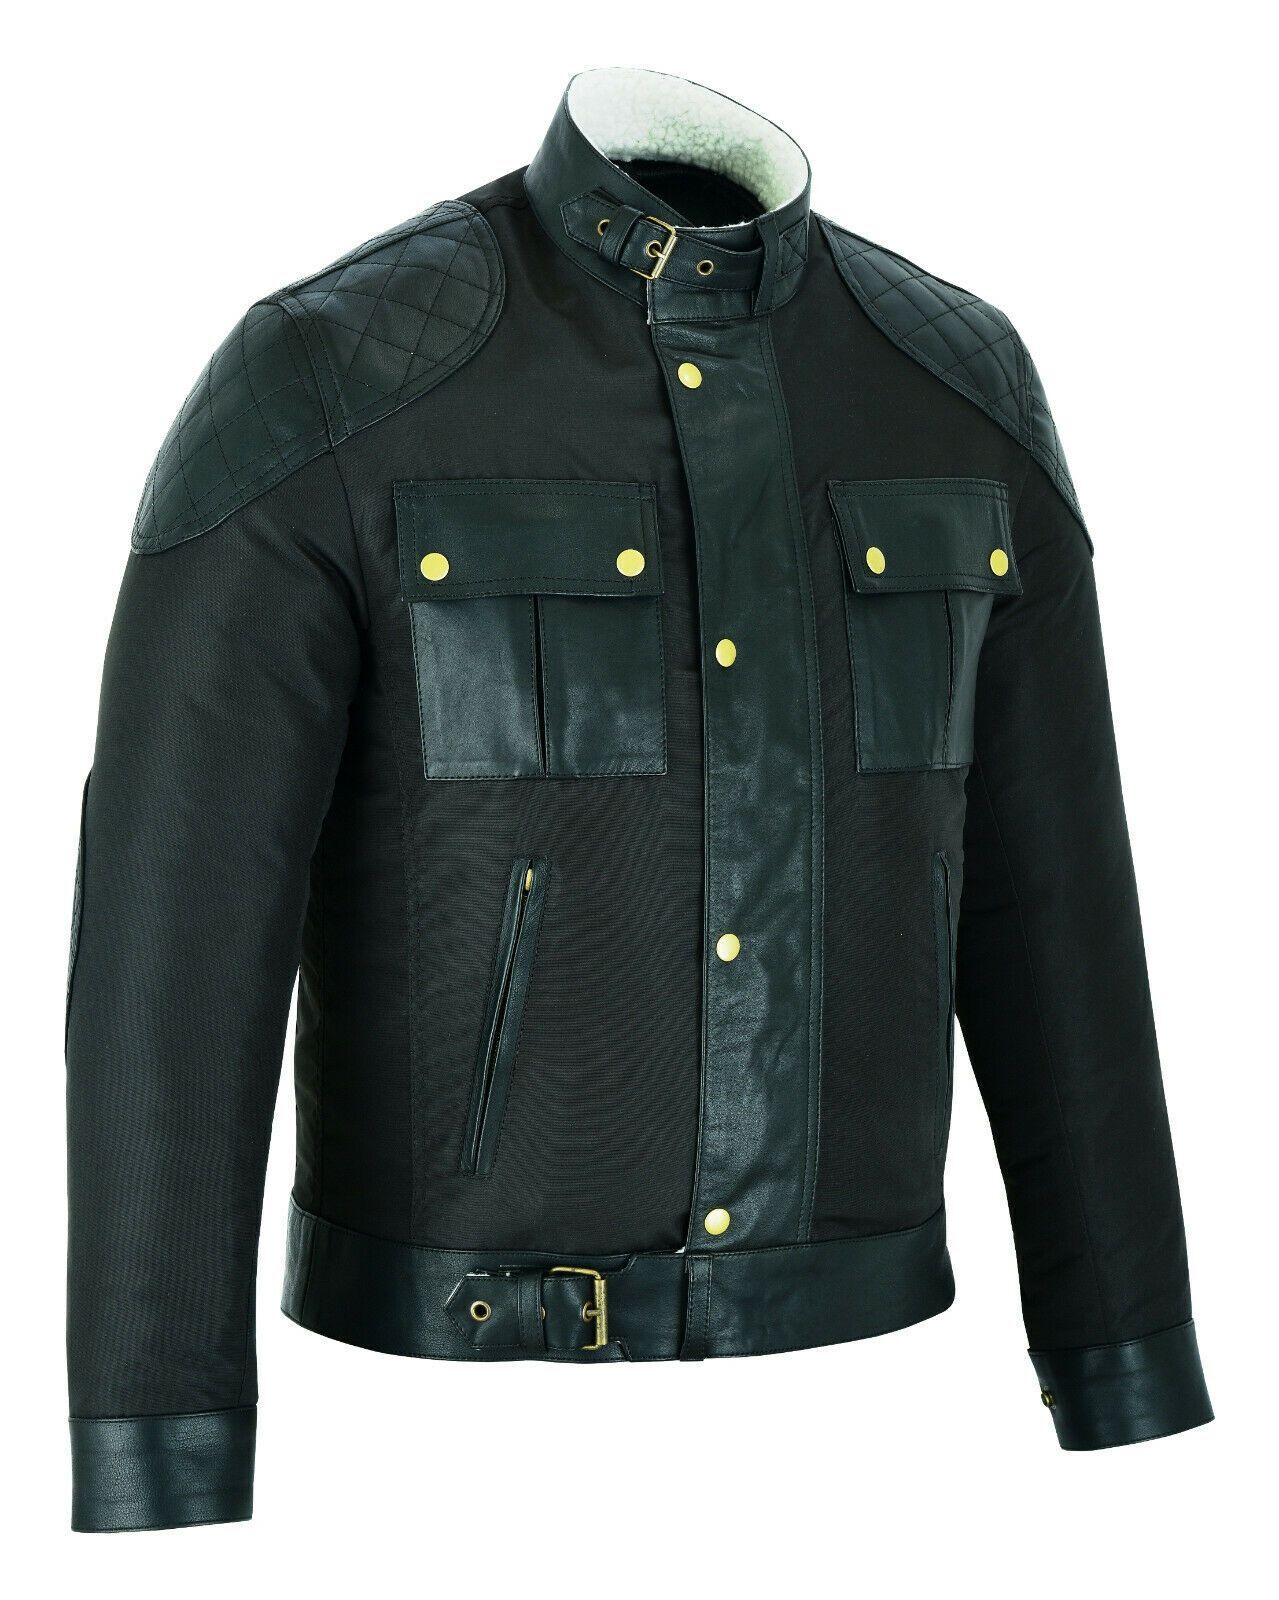 Mens Fabric Fashion Jacket Biker Style with Cream Fur & Leather Taslan Sheepskin